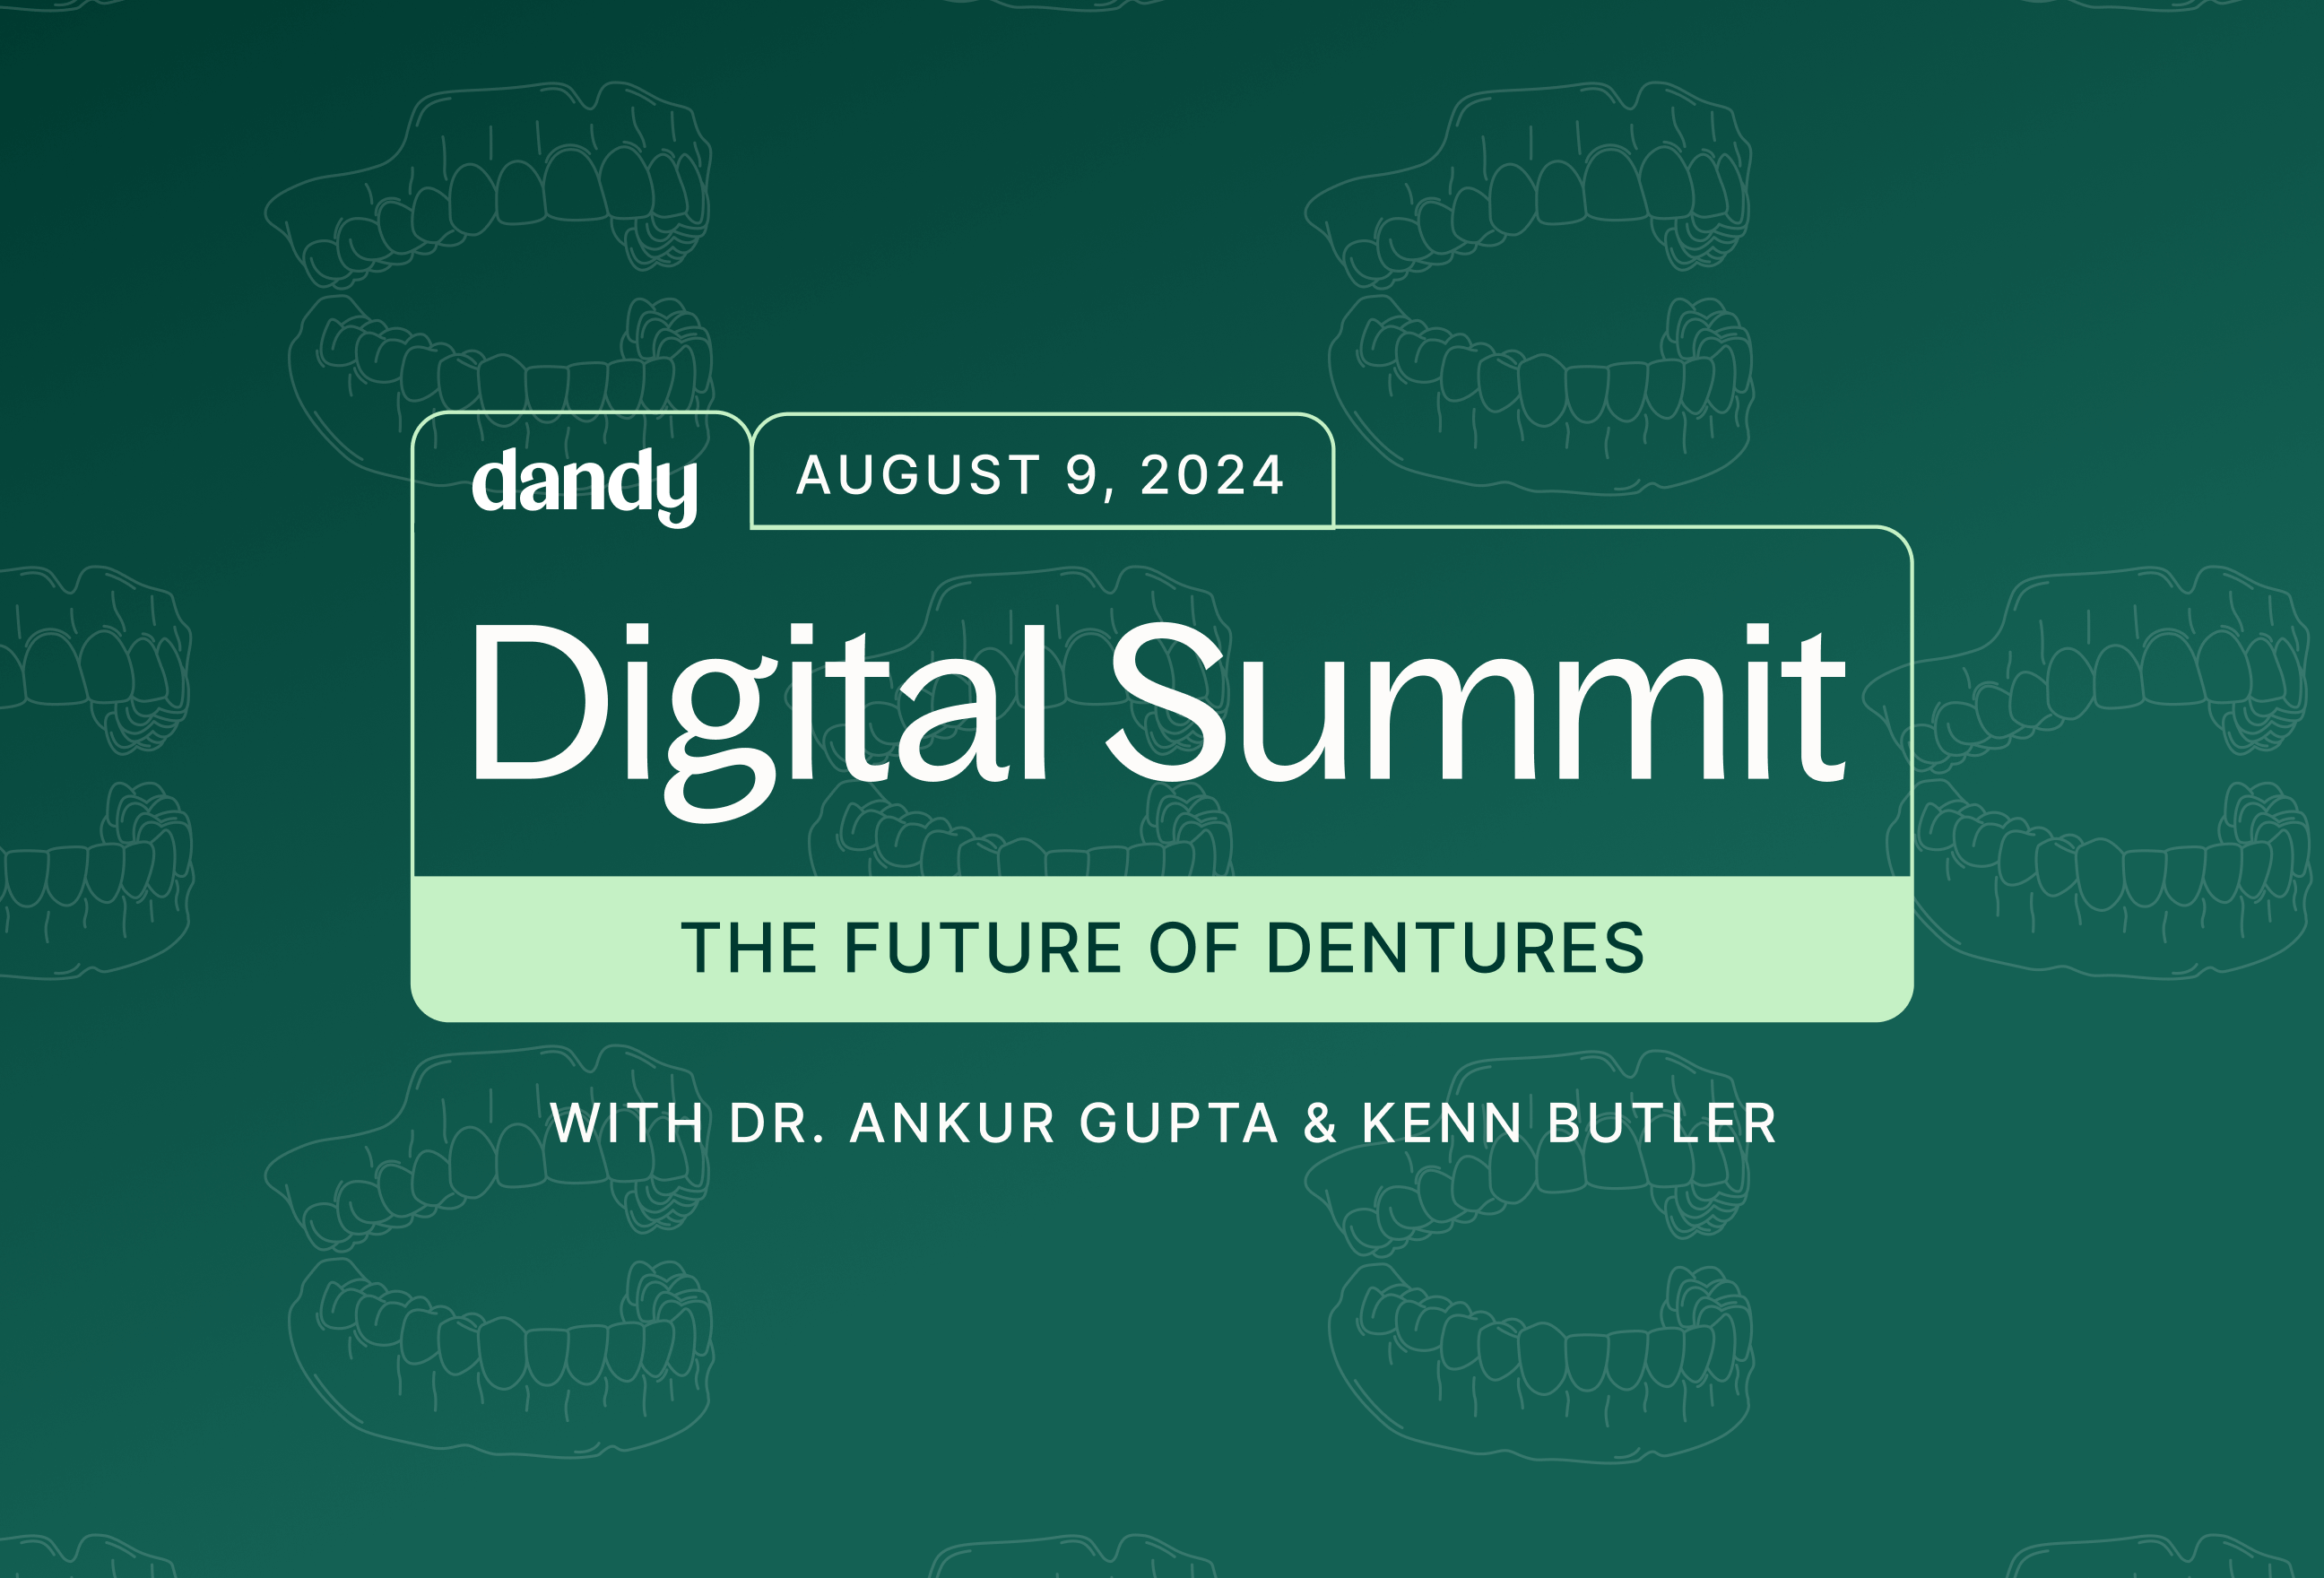 Dandy Digital Summit: The Future of Dentures